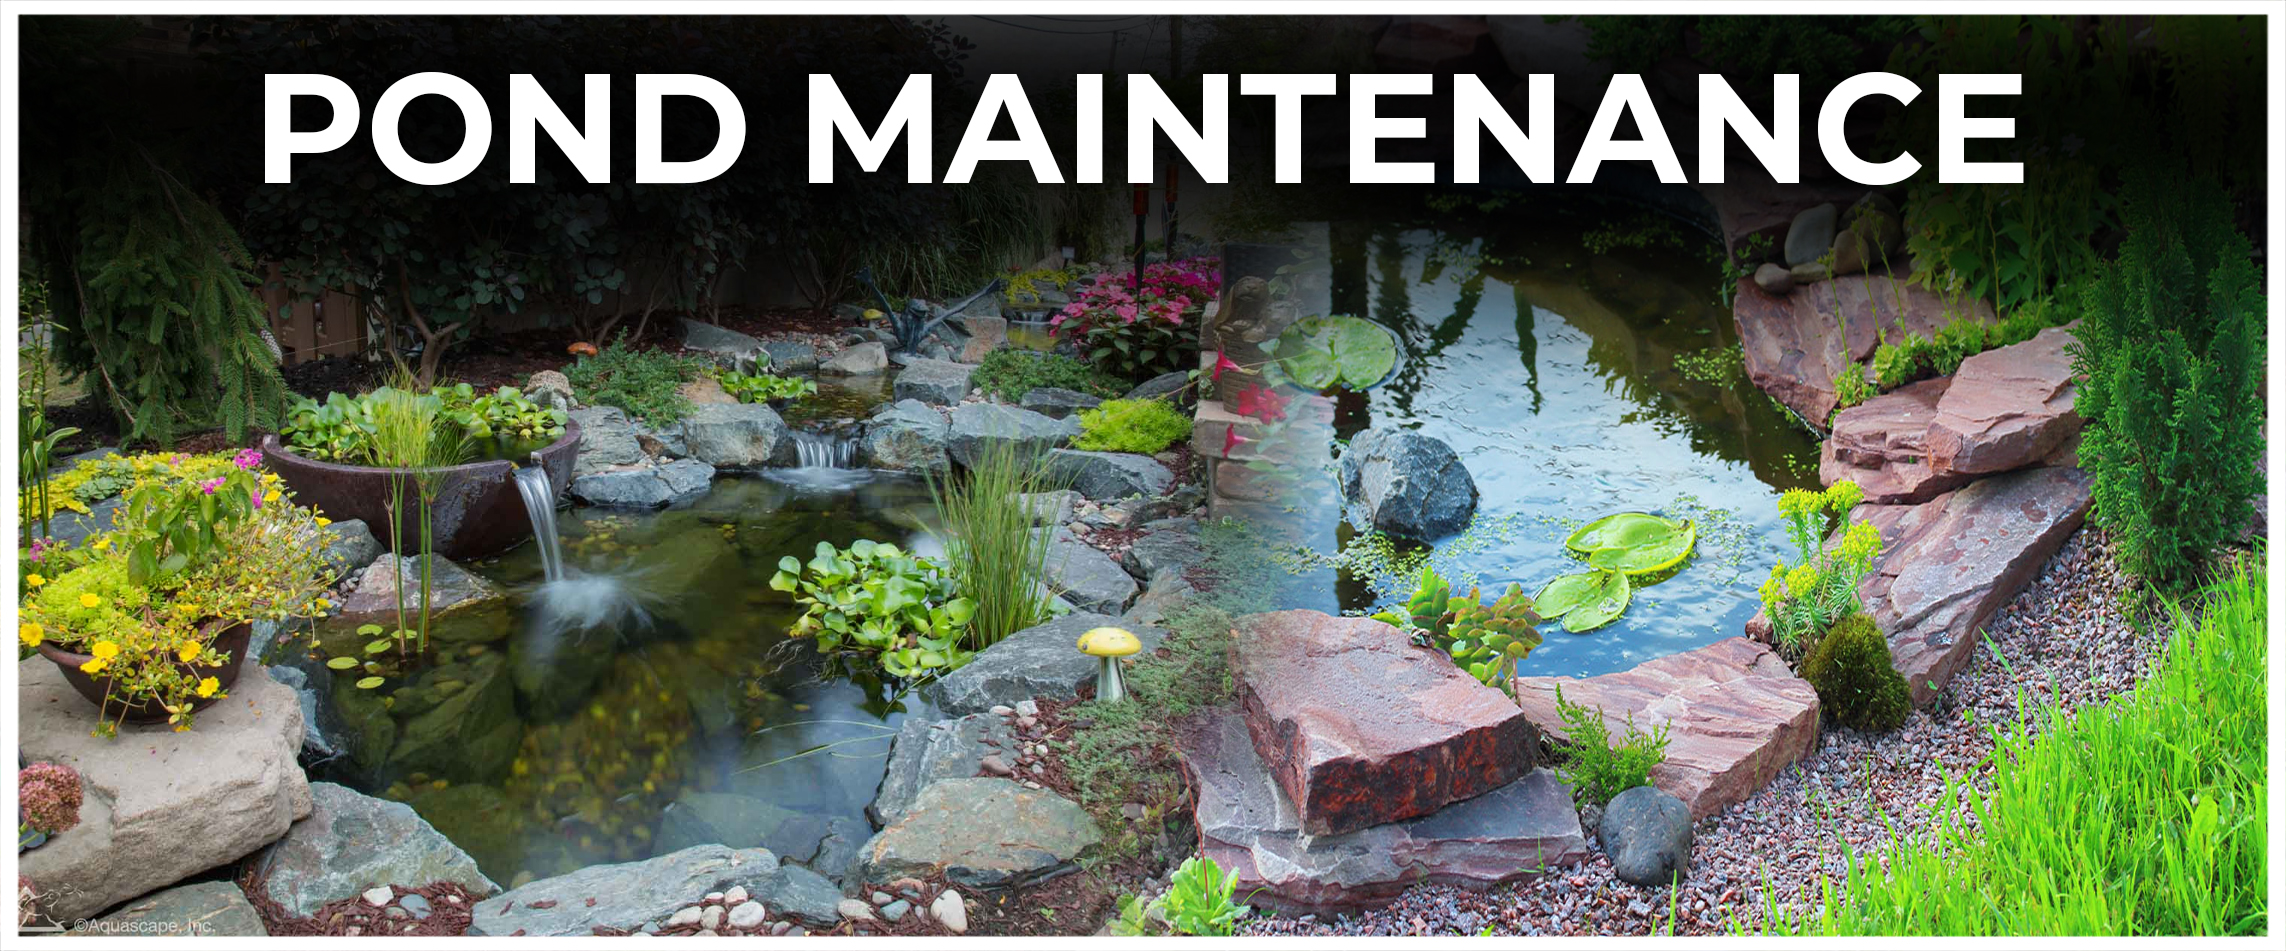  Pond Maintenance